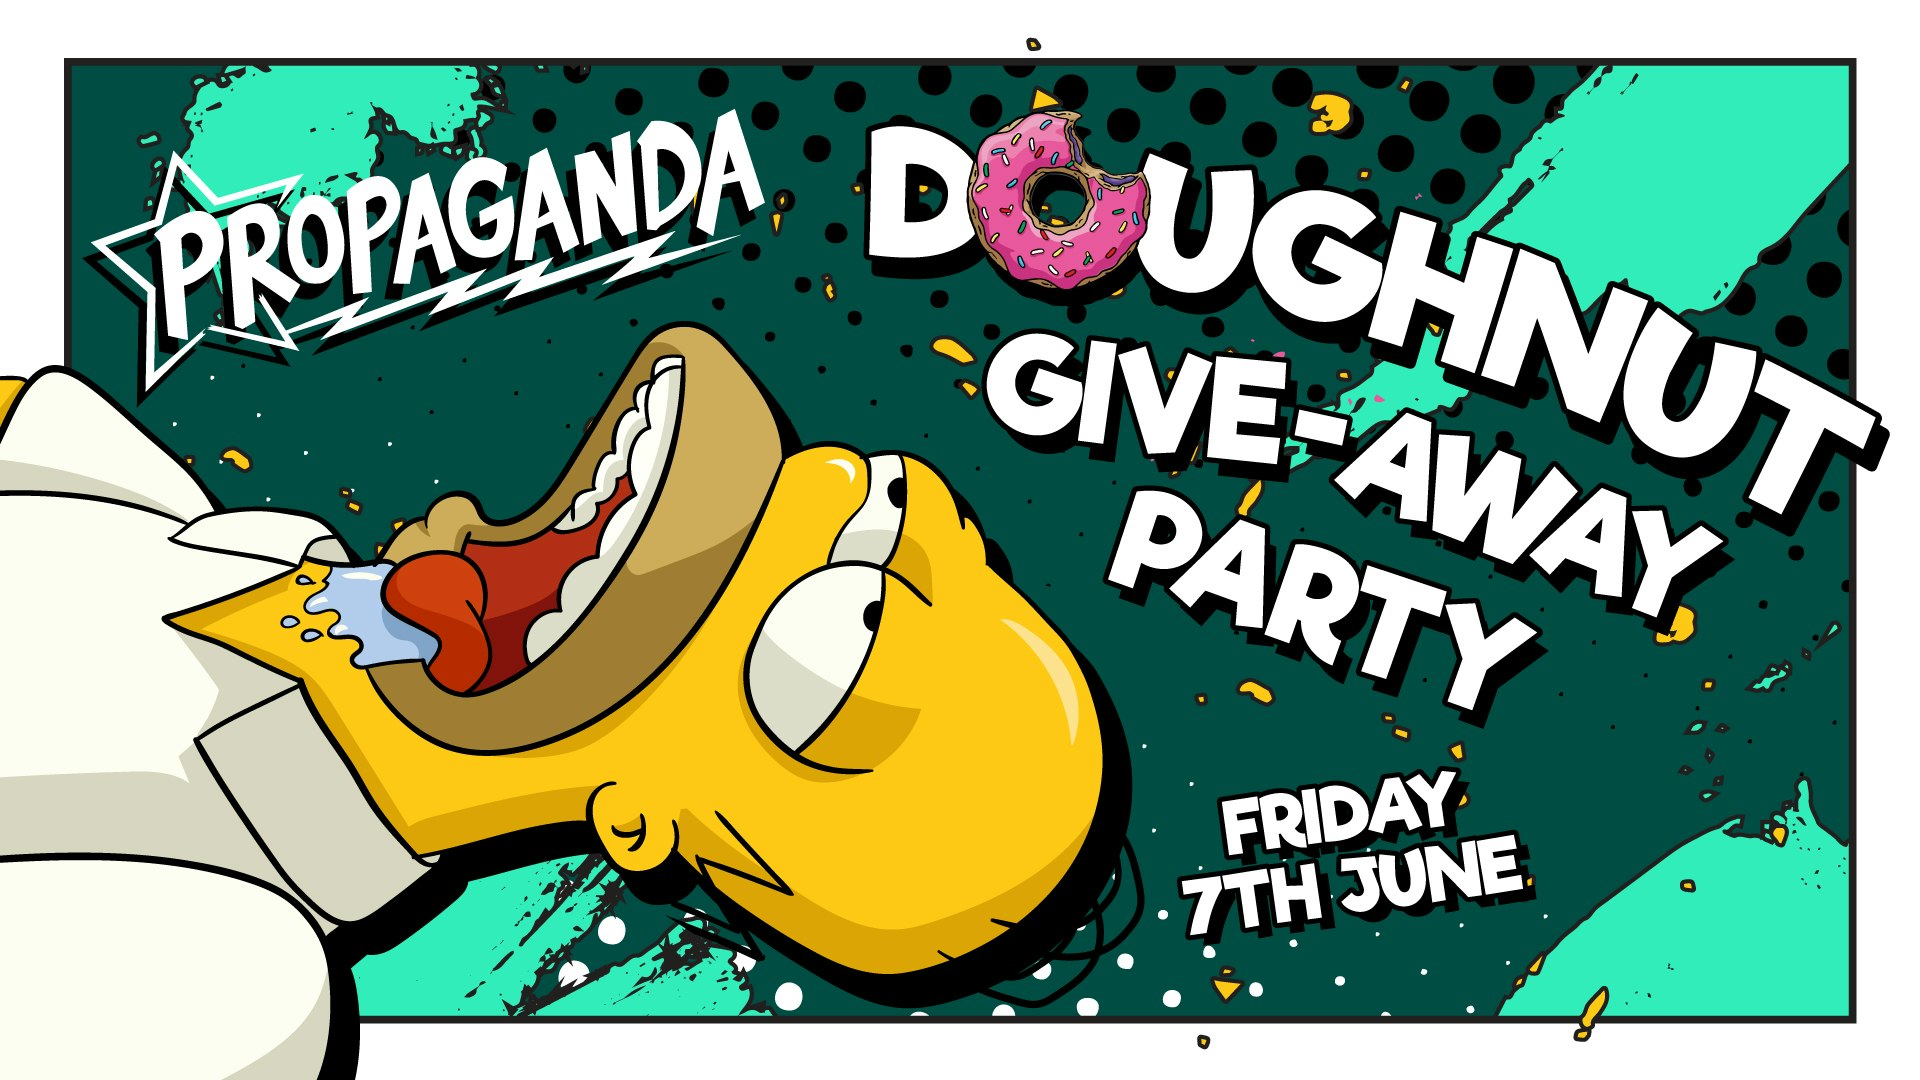 Propaganda Bath – Doughnut Party!